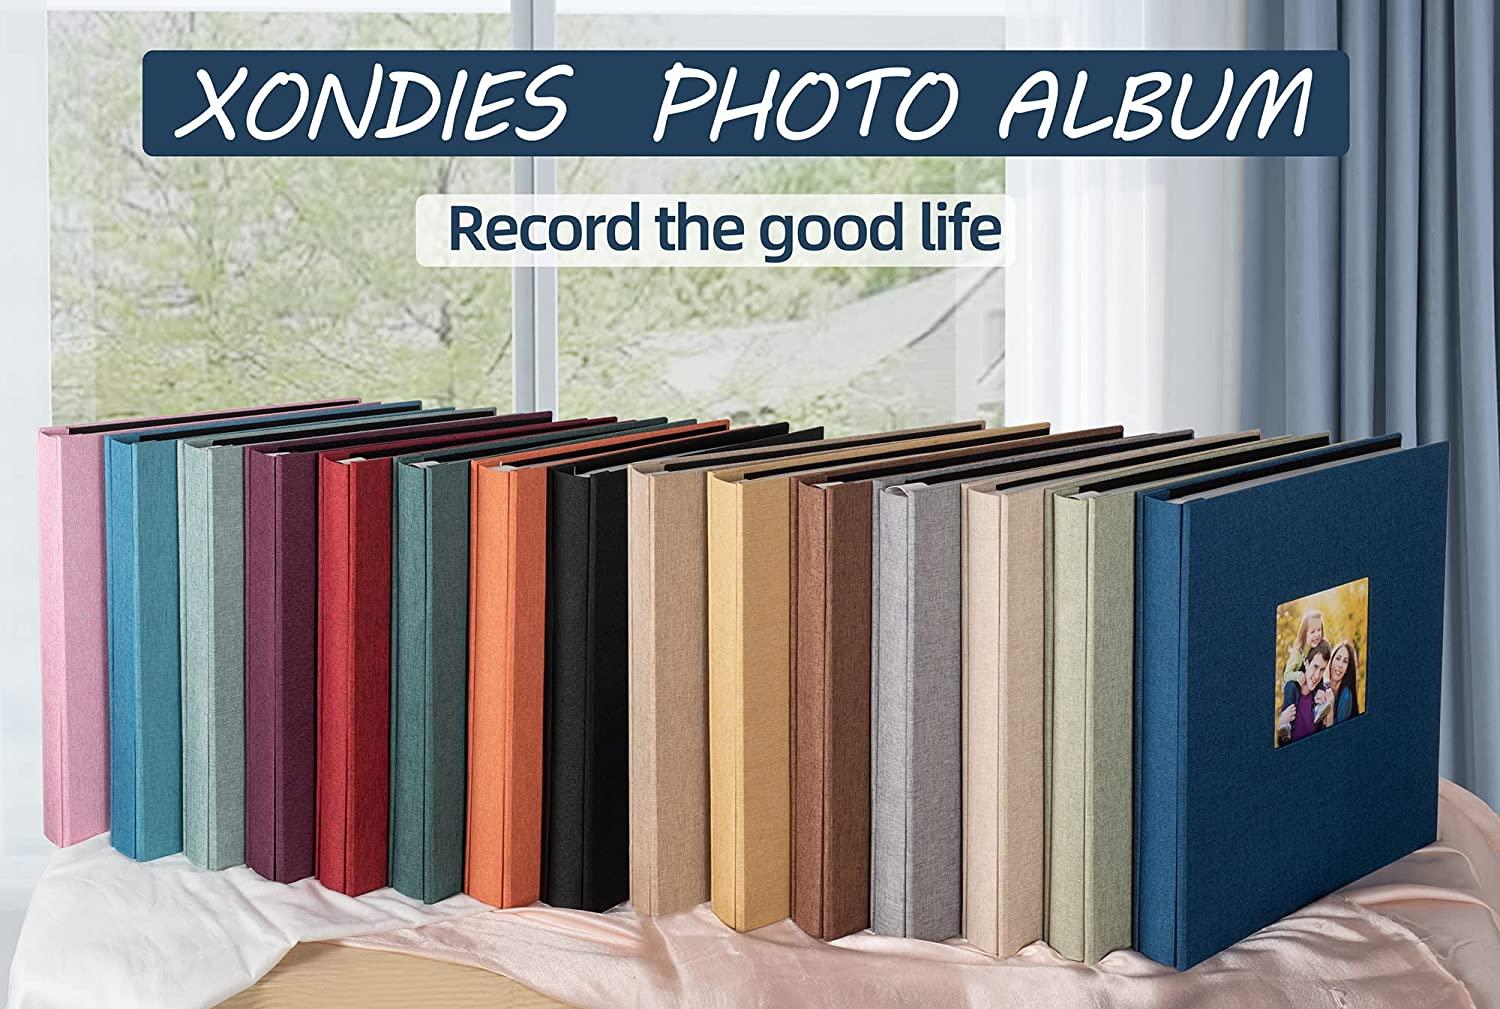 Personalized Photo Album for 100 Photos 4x6. Slip-in Pocket Photo